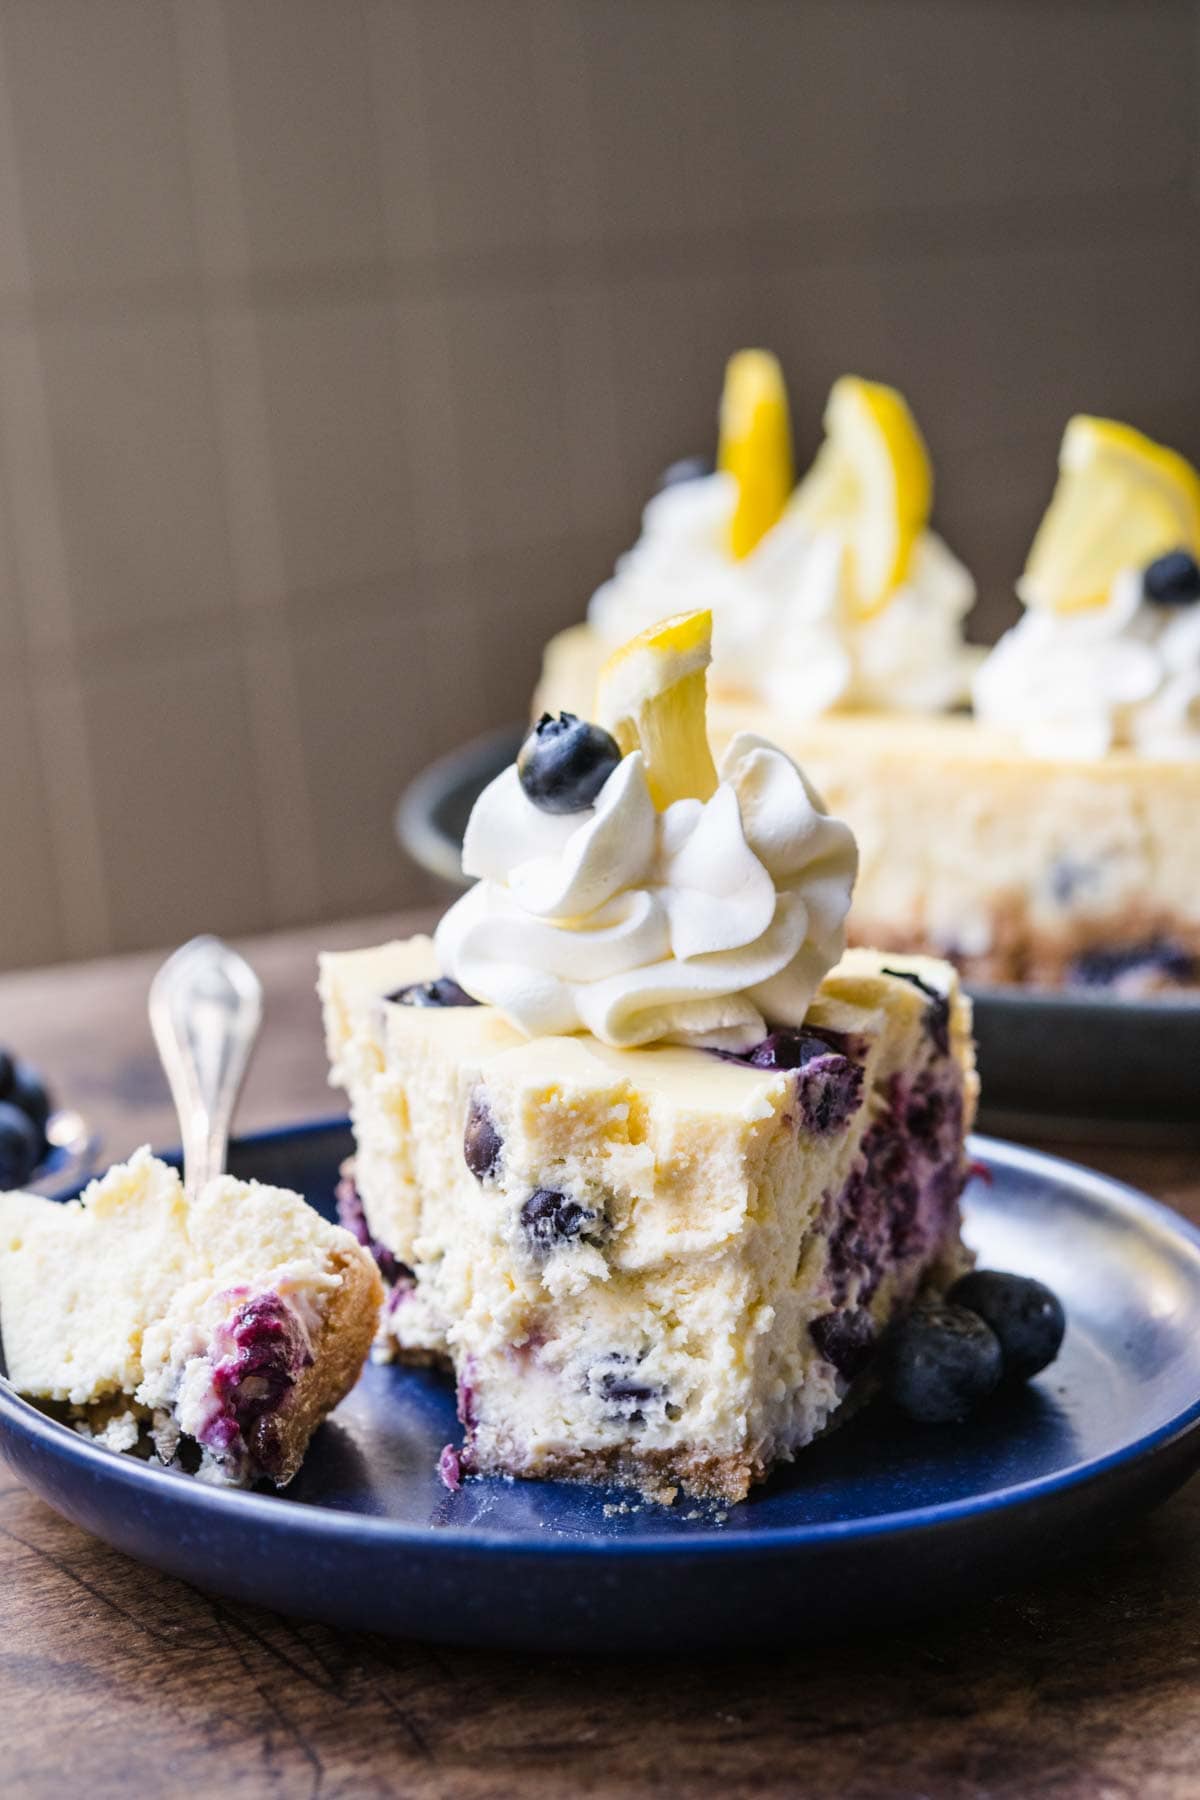 Blueberry Lemon Cheesecake slice on plate with whipped cream, fresh blueberries and lemon garnish